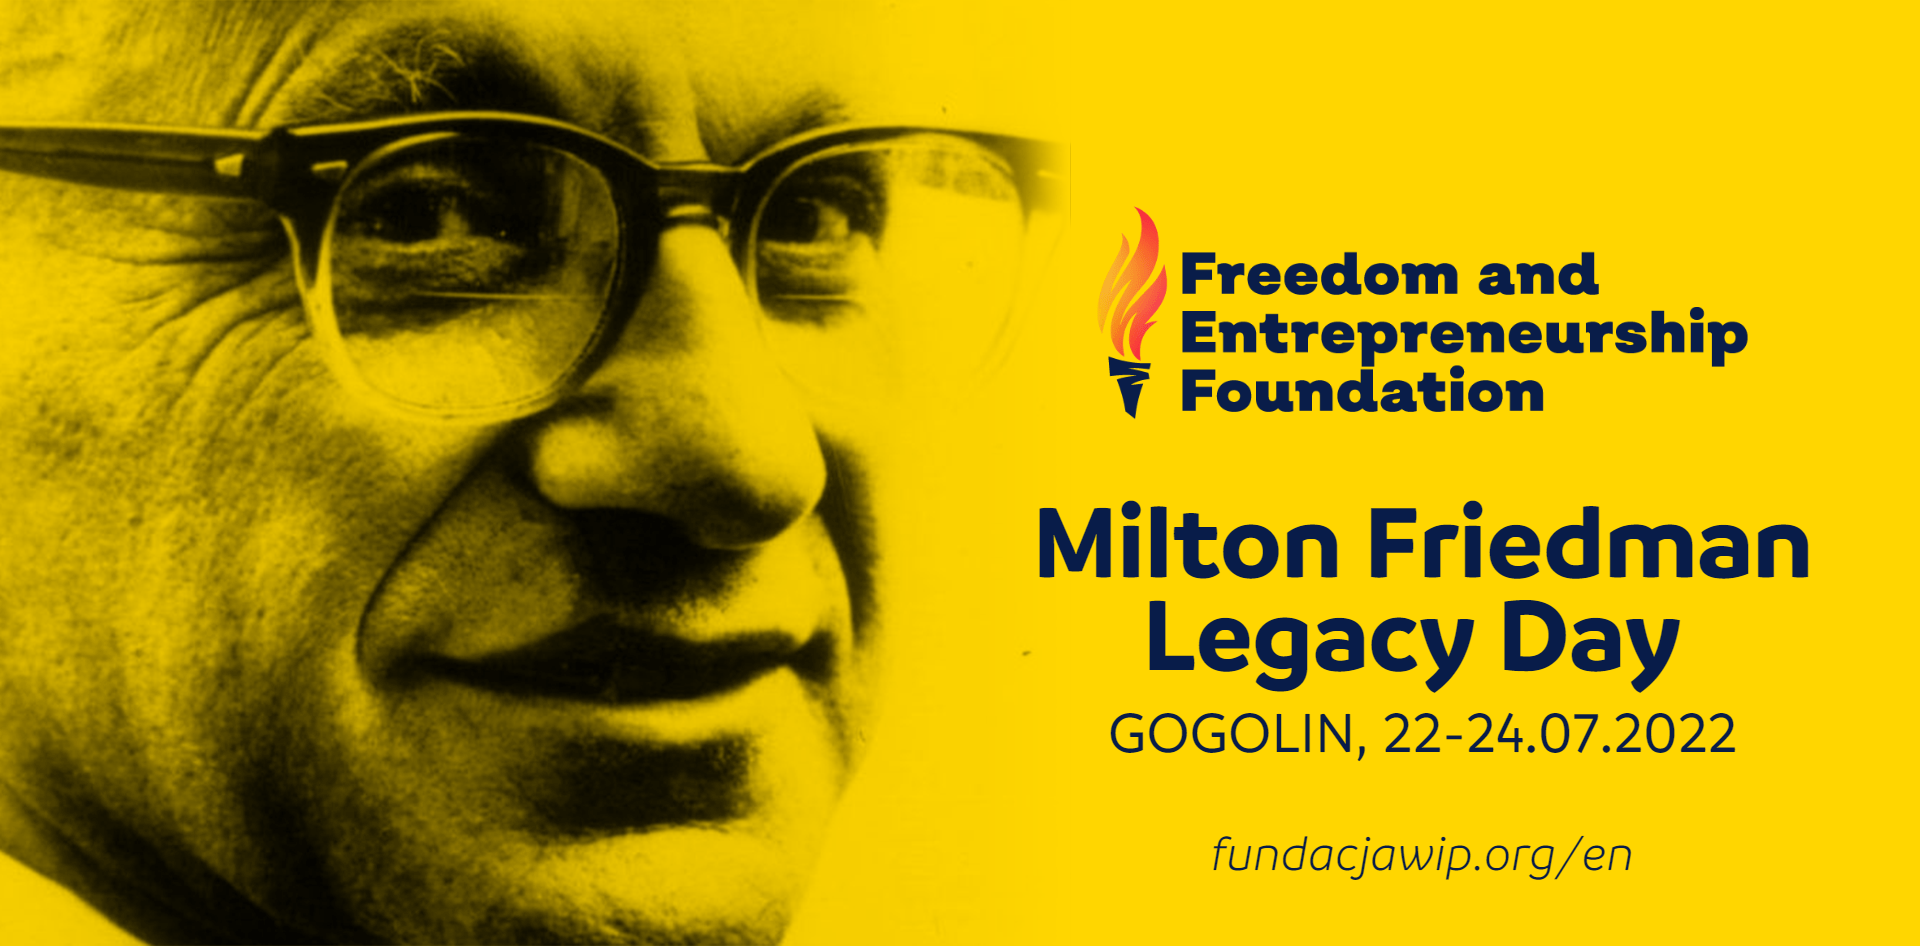 Milton Friedman Legacy Day 2022 early bird tickets available!